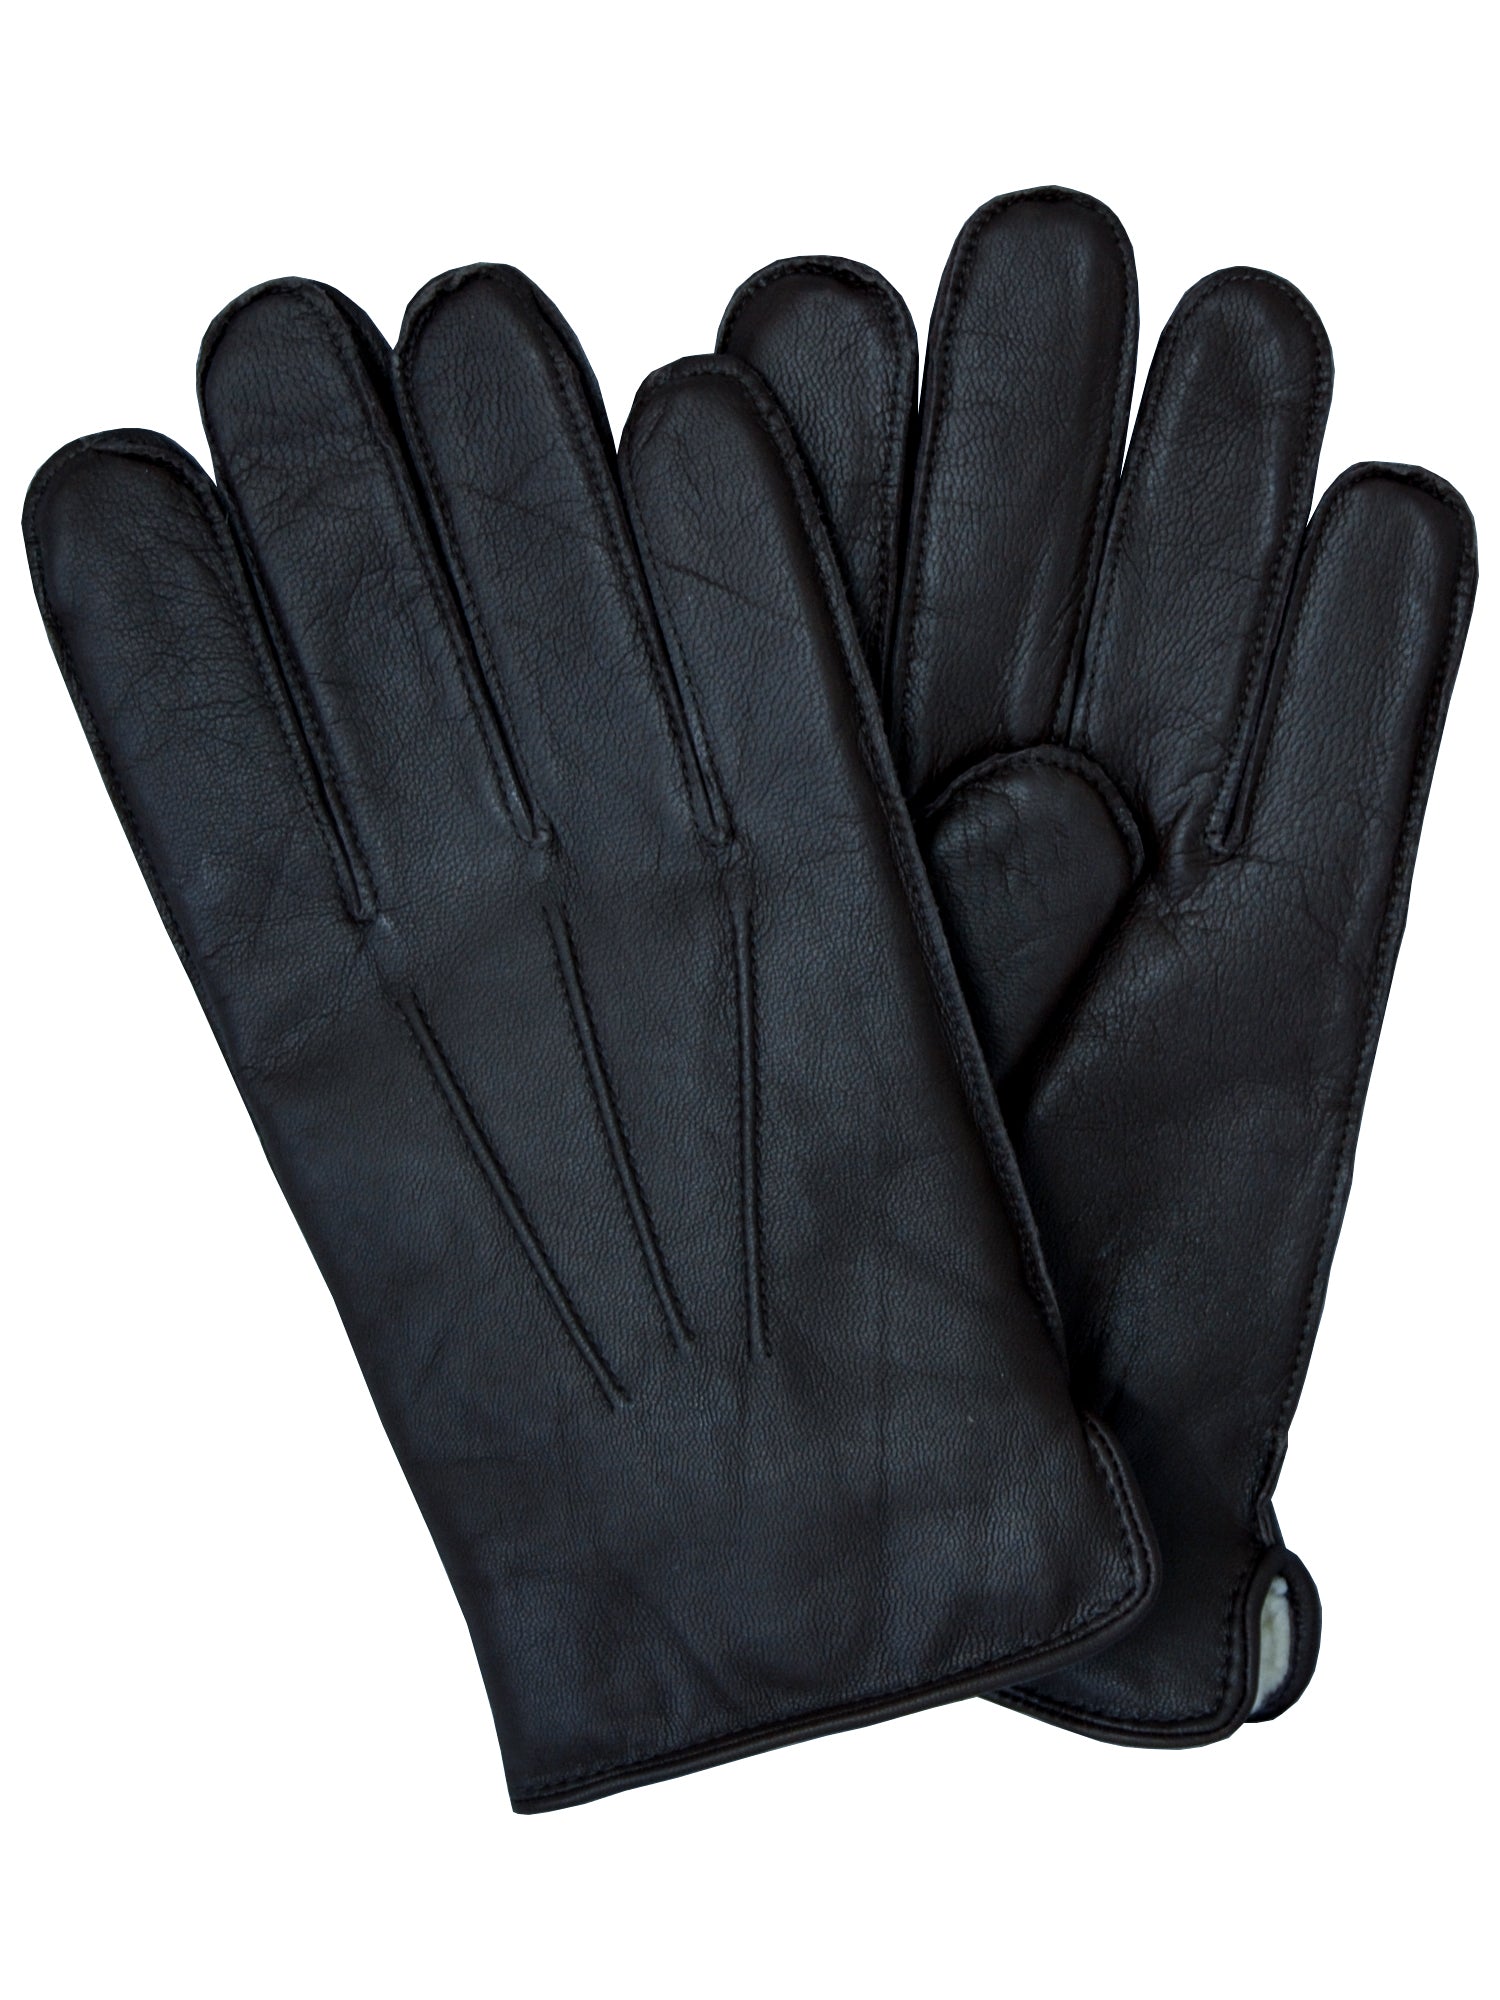 Lauer Men's Goatskin Leather Gloves in Black - 1879-BLK